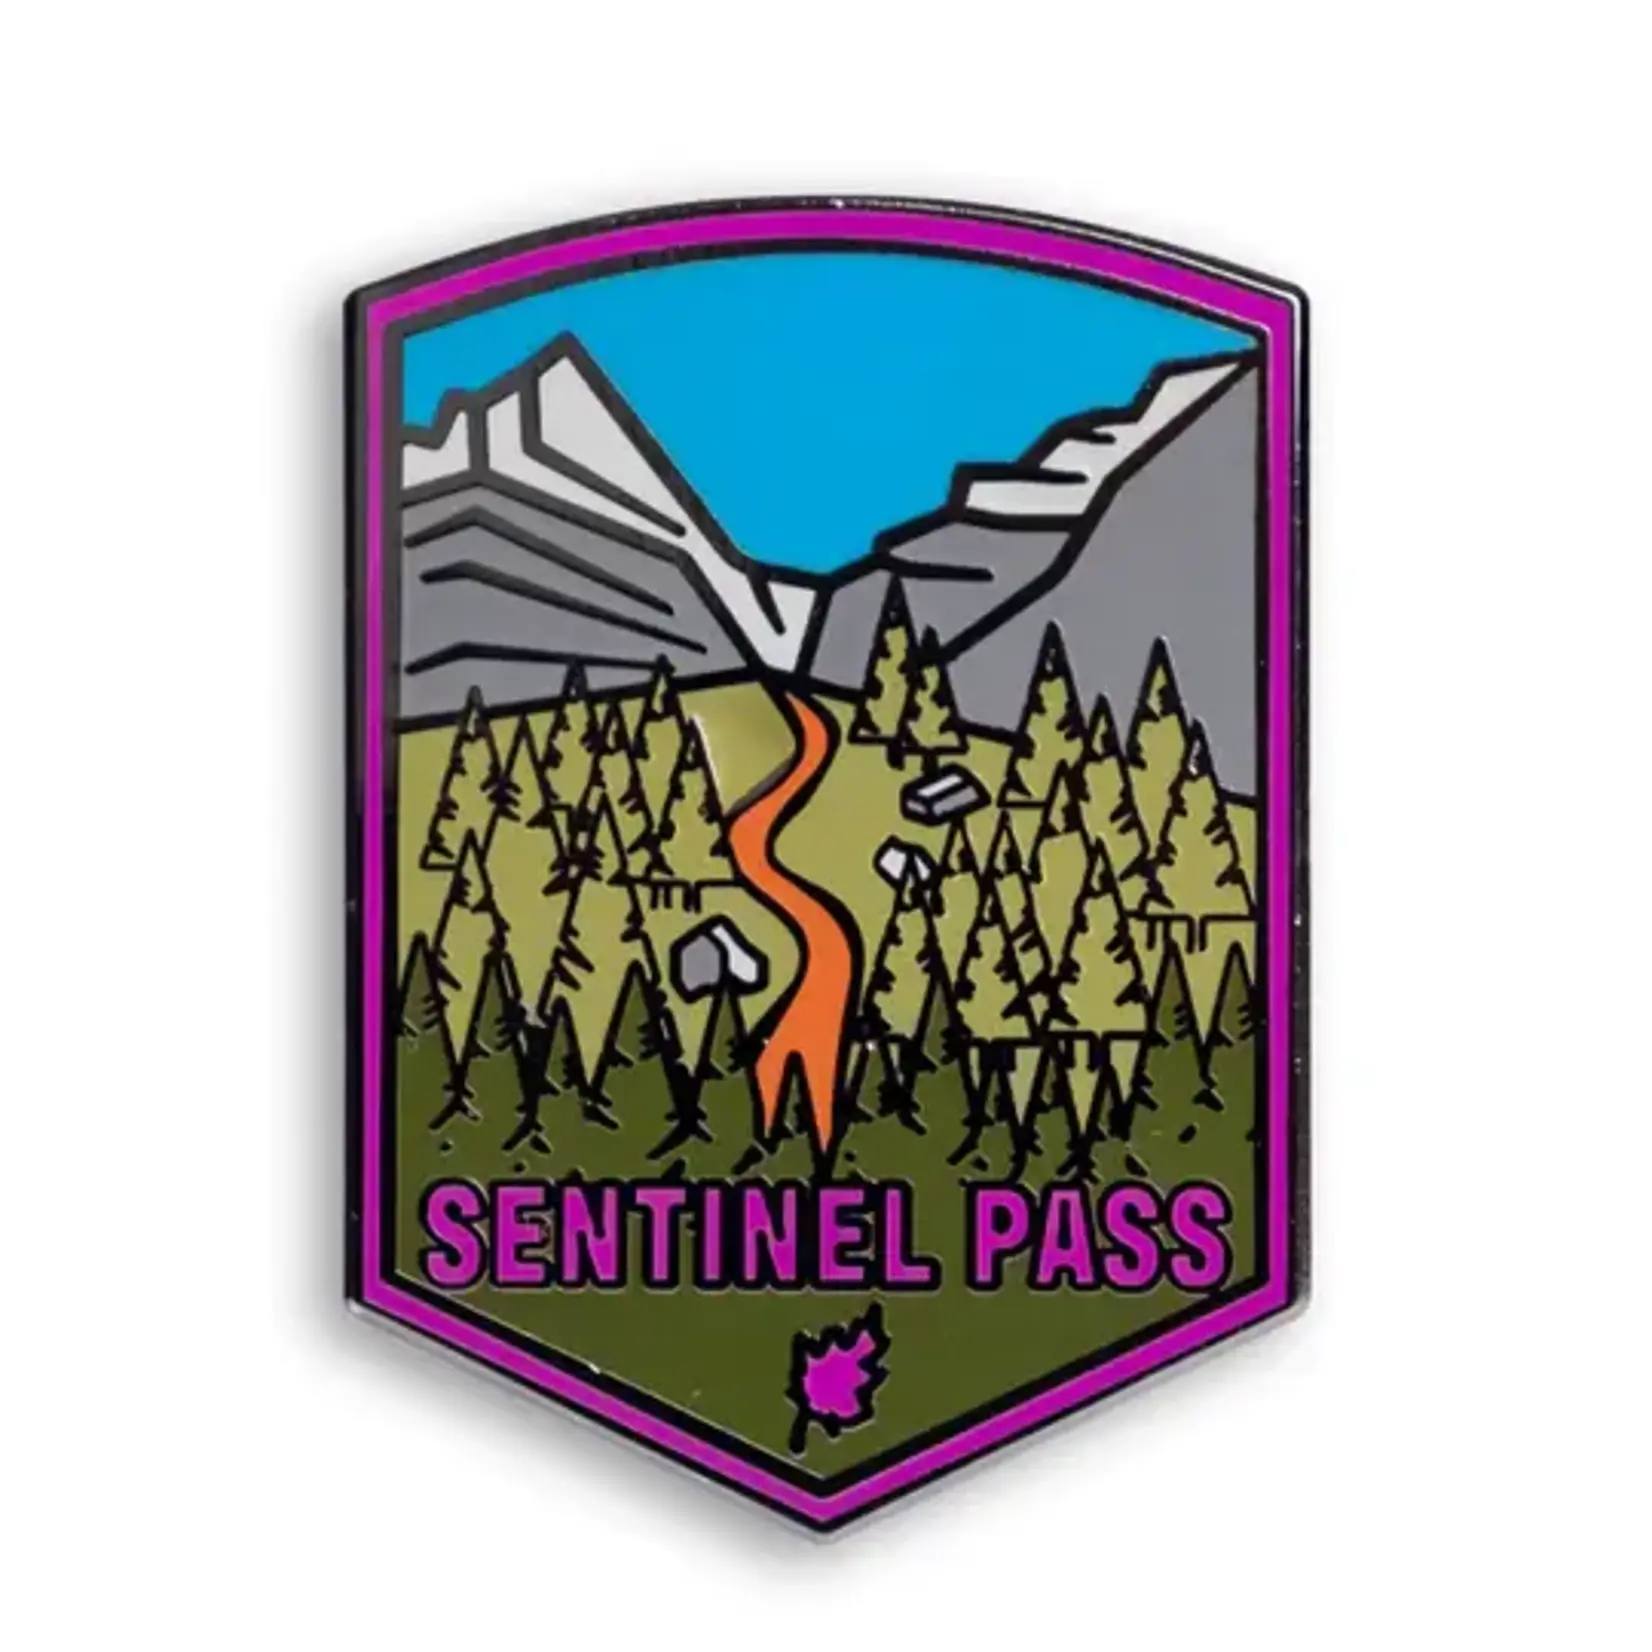 Peak Pins Enamel Pin - Sentinel Pass